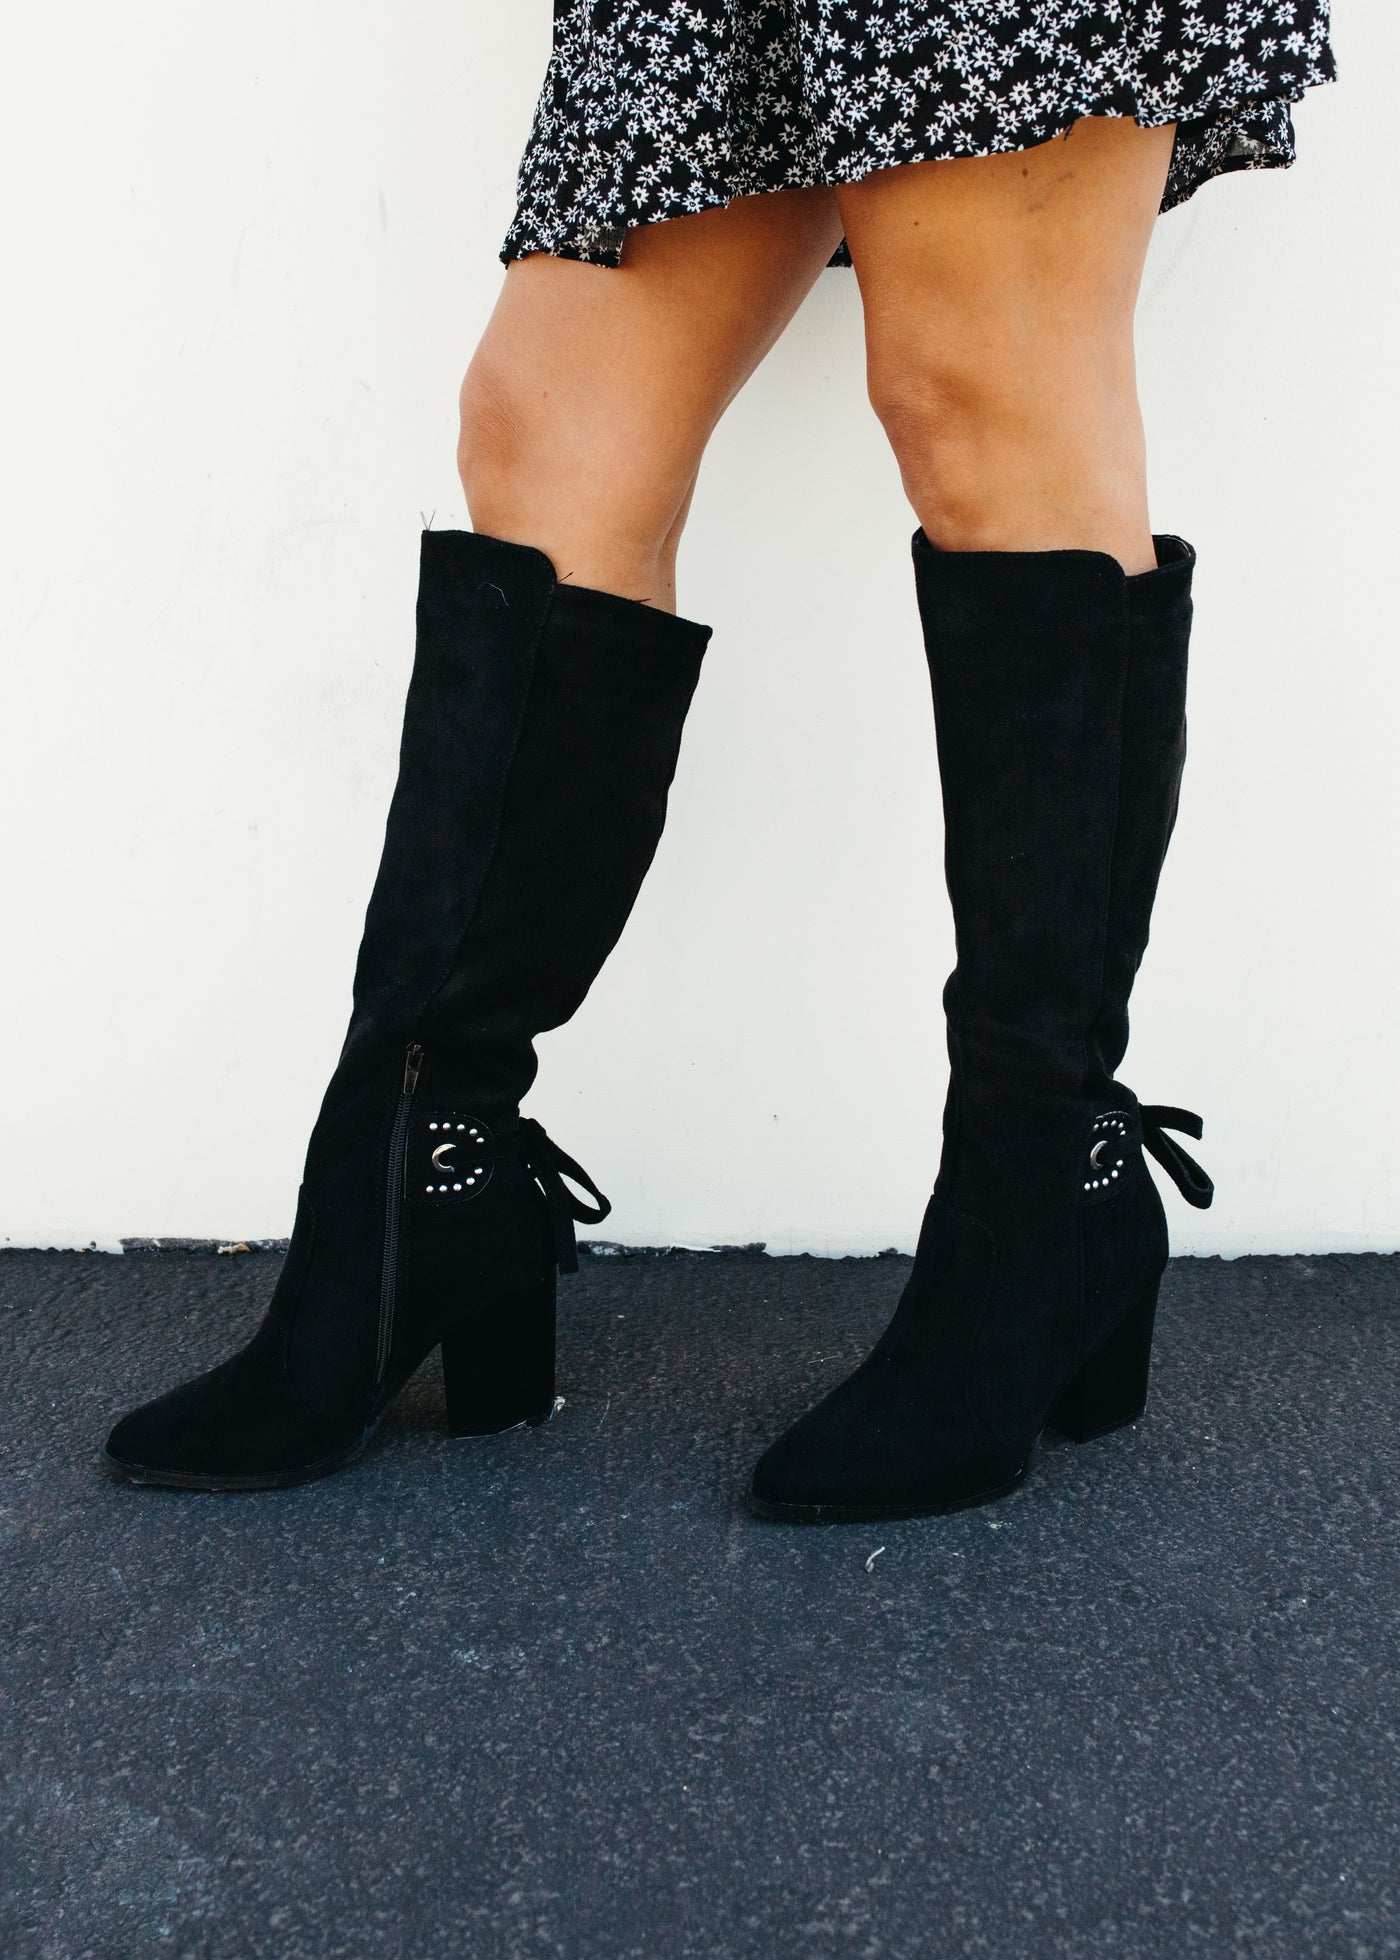 Rayna - Tied Knee High Boots